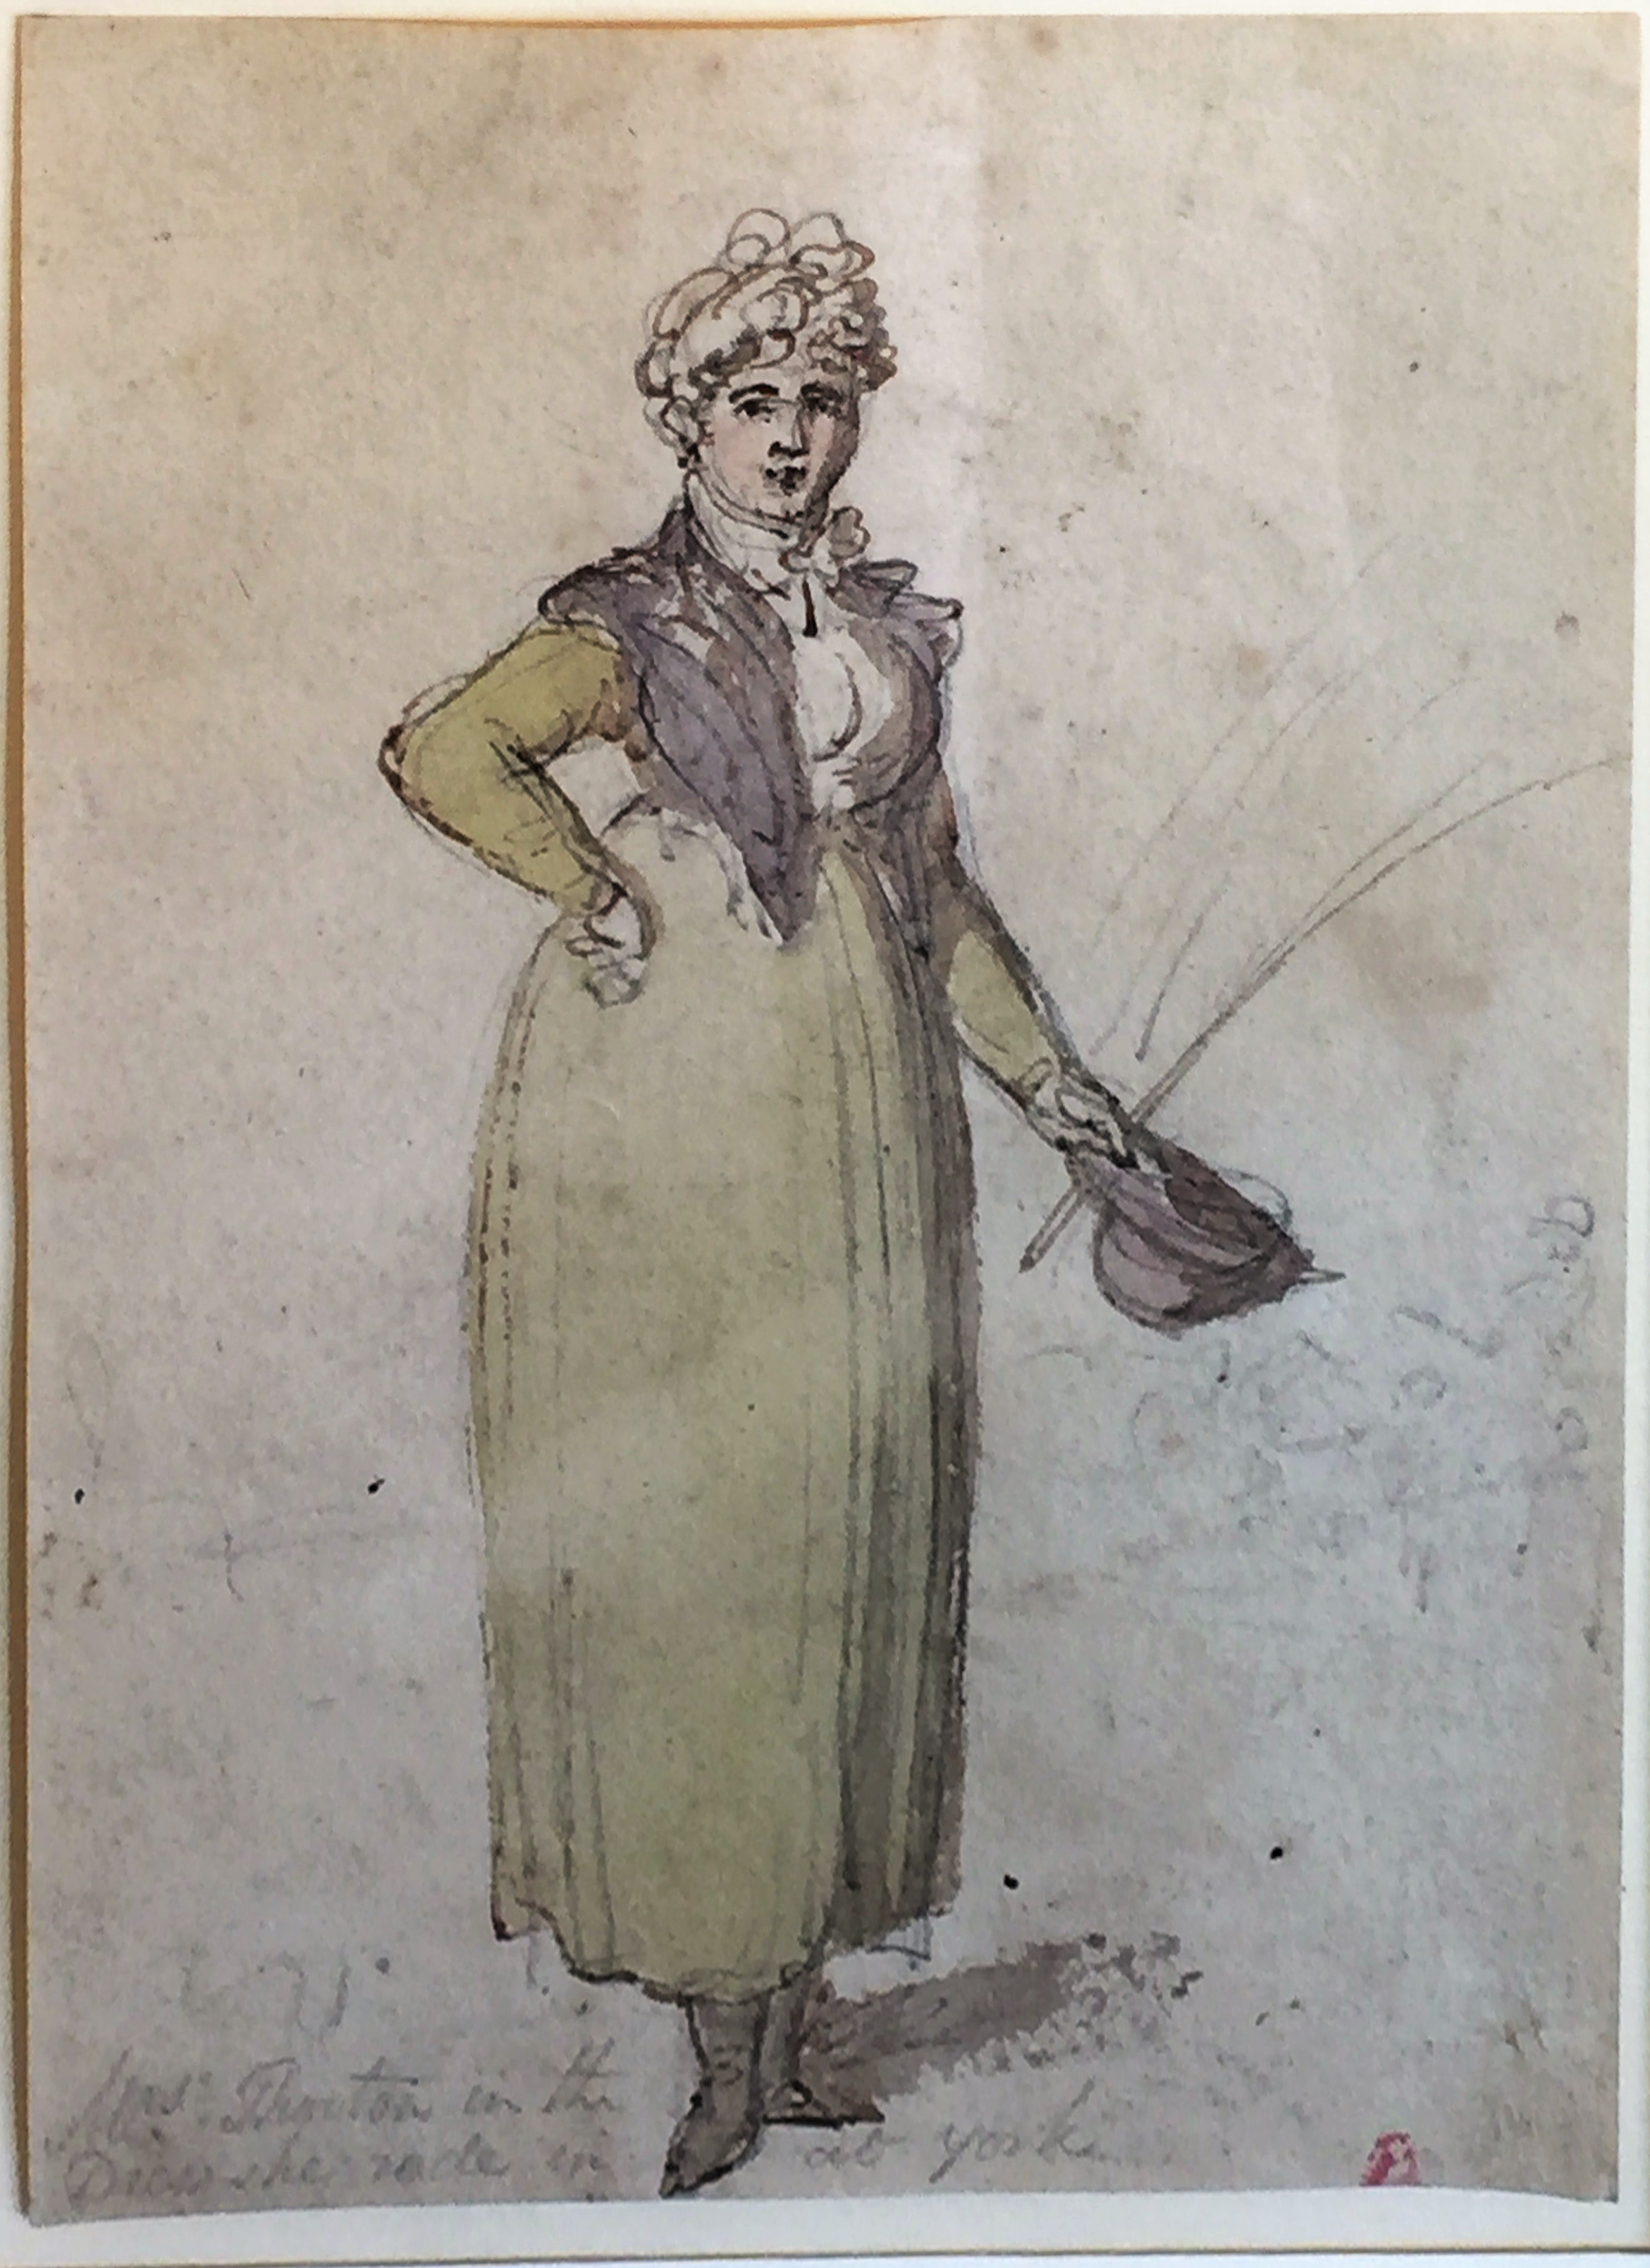 Alicia Thornton, the original women jockey